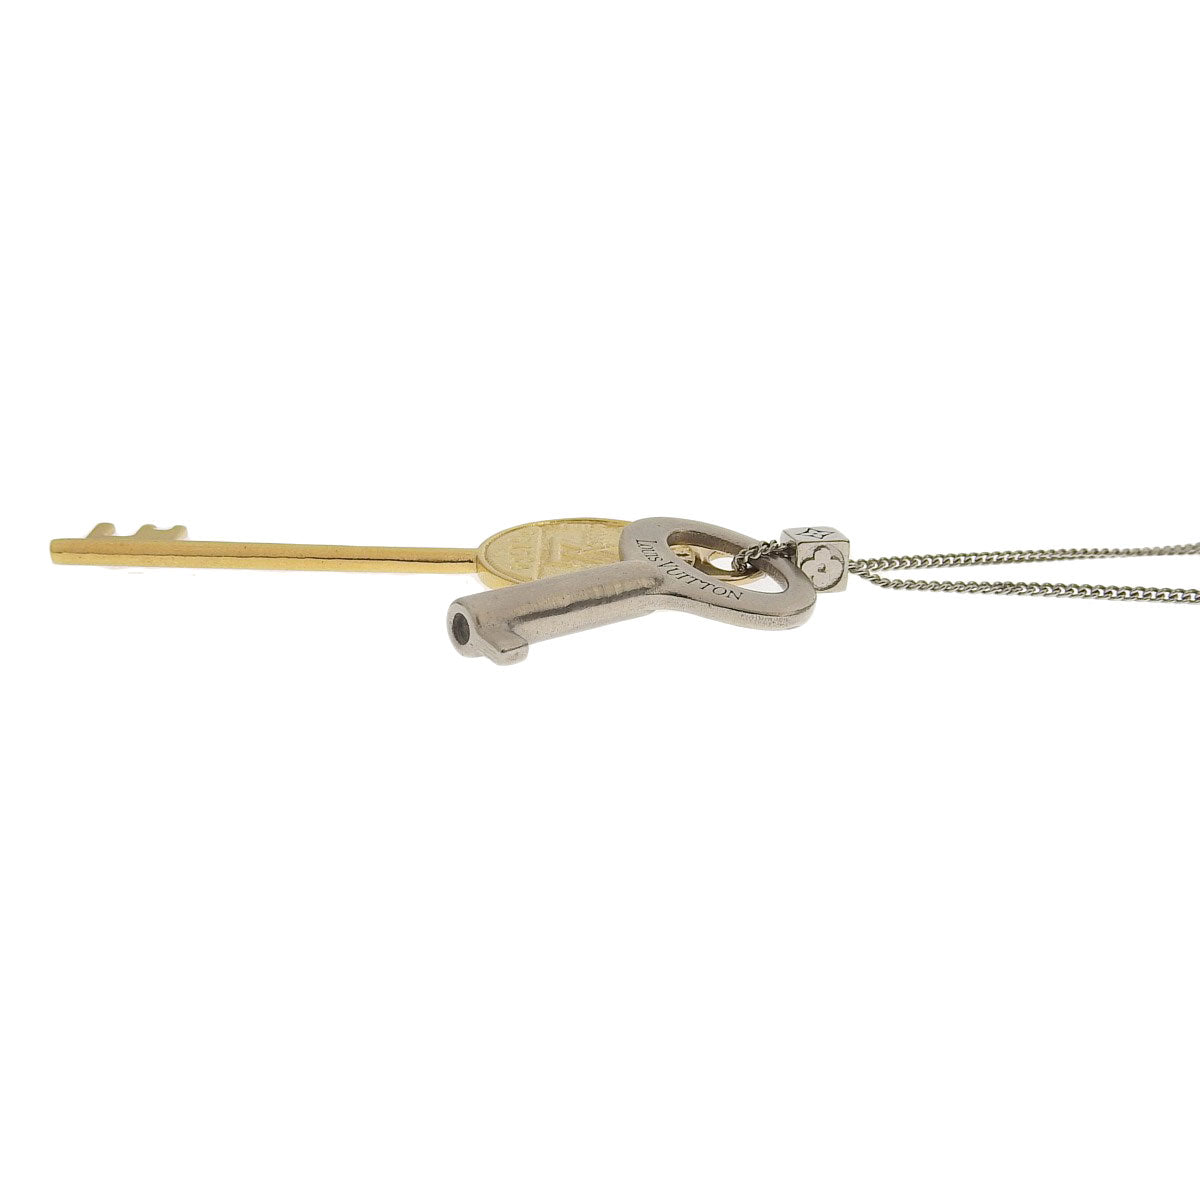 LV Key Pendant Necklace MP2842